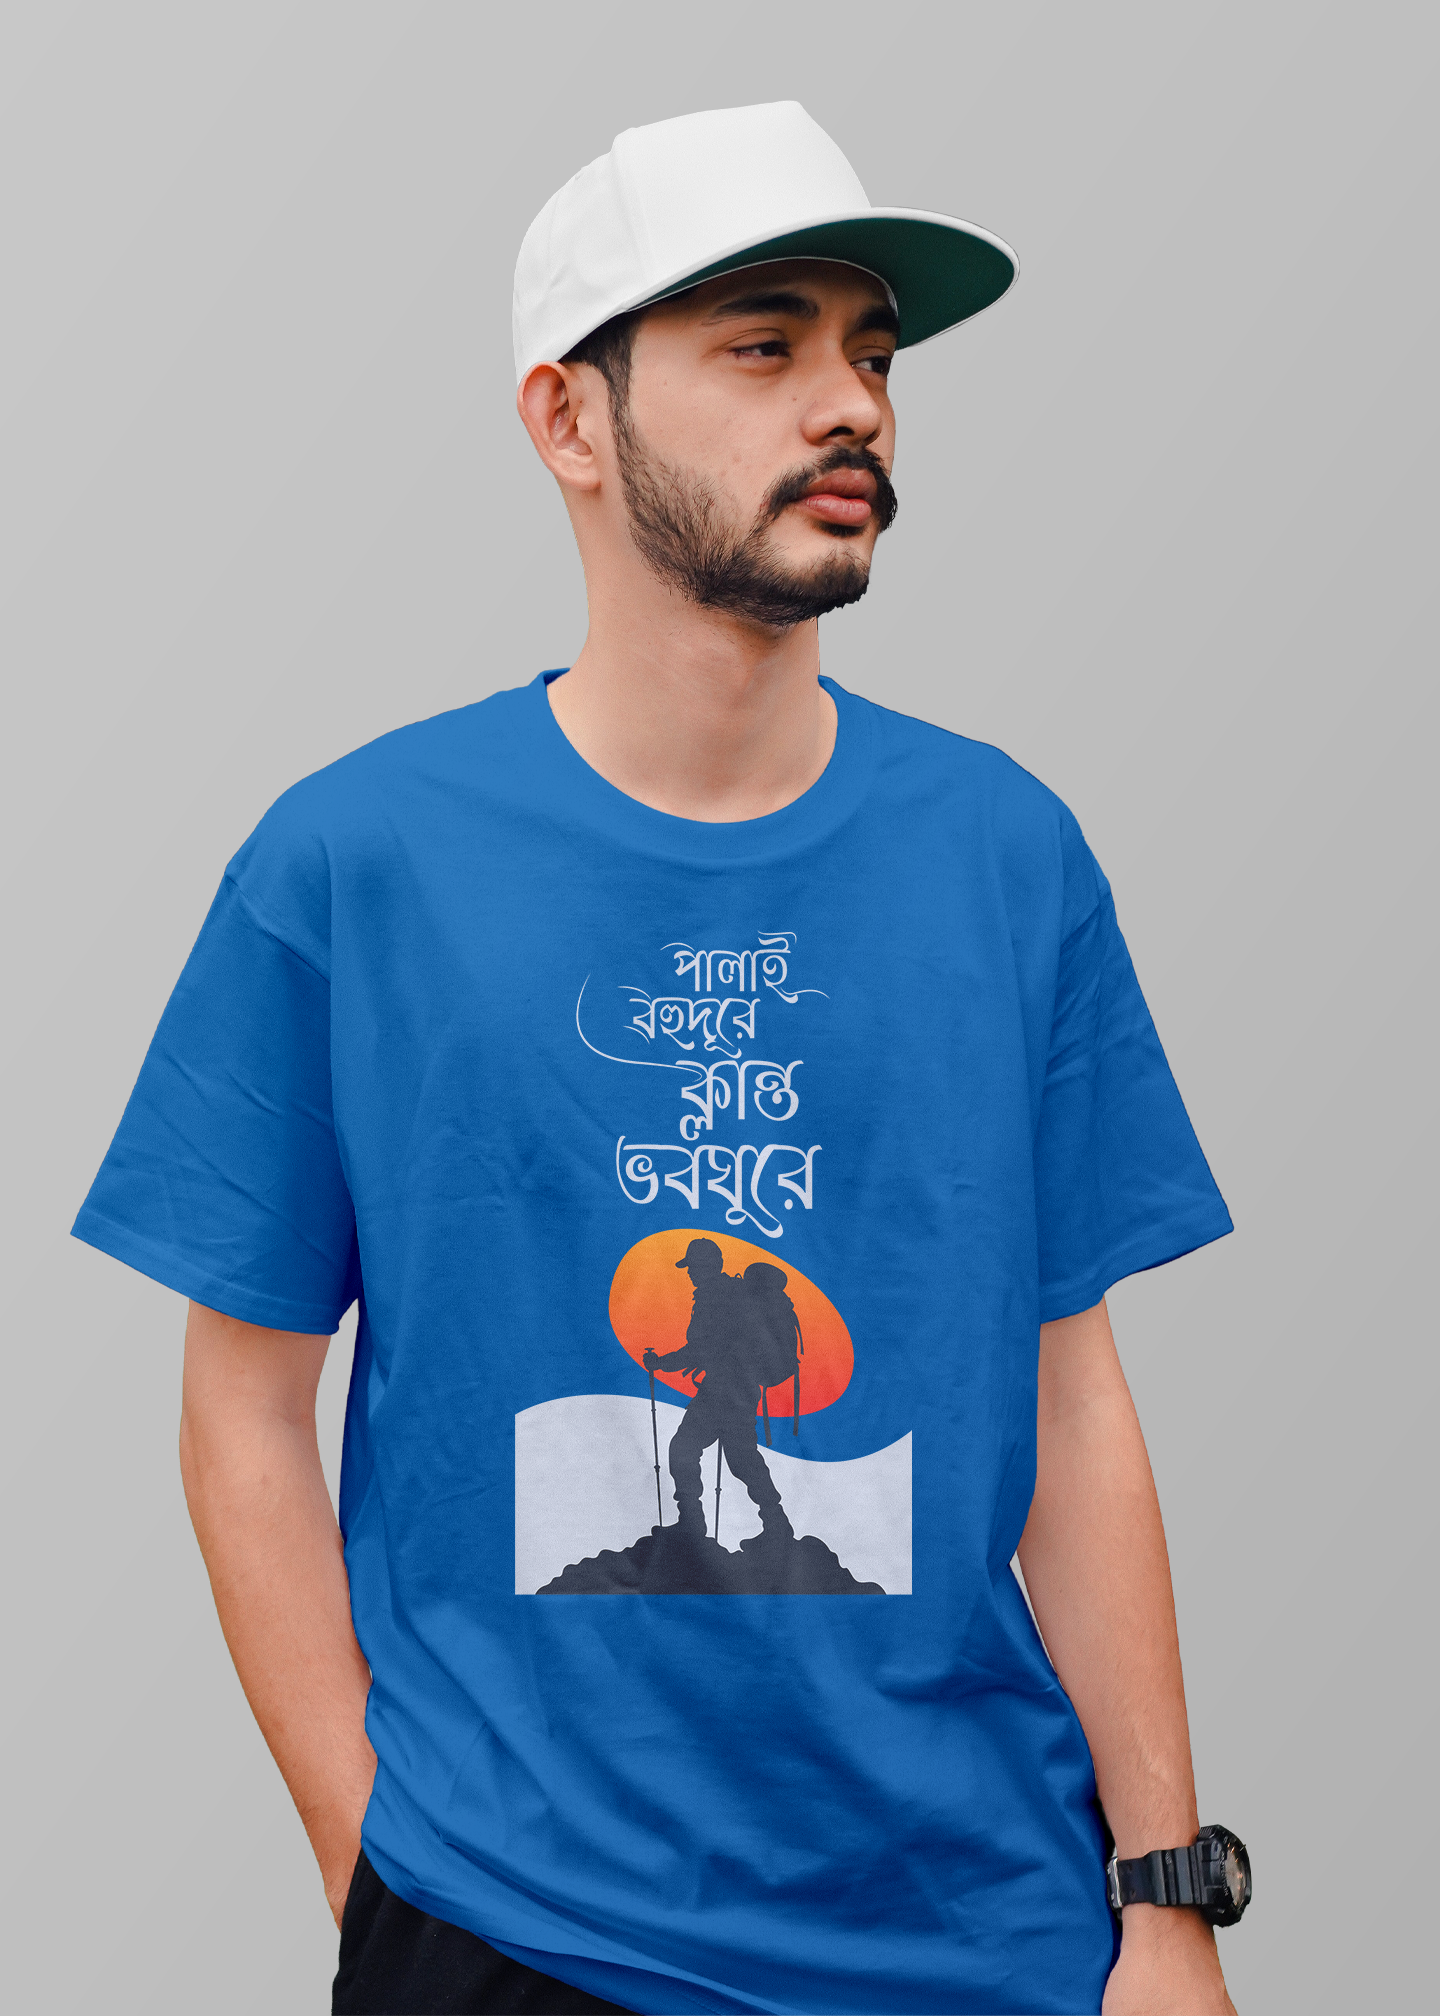 Klanto voboghure Printed Half Sleeve Premium Cotton T-shirt For Men